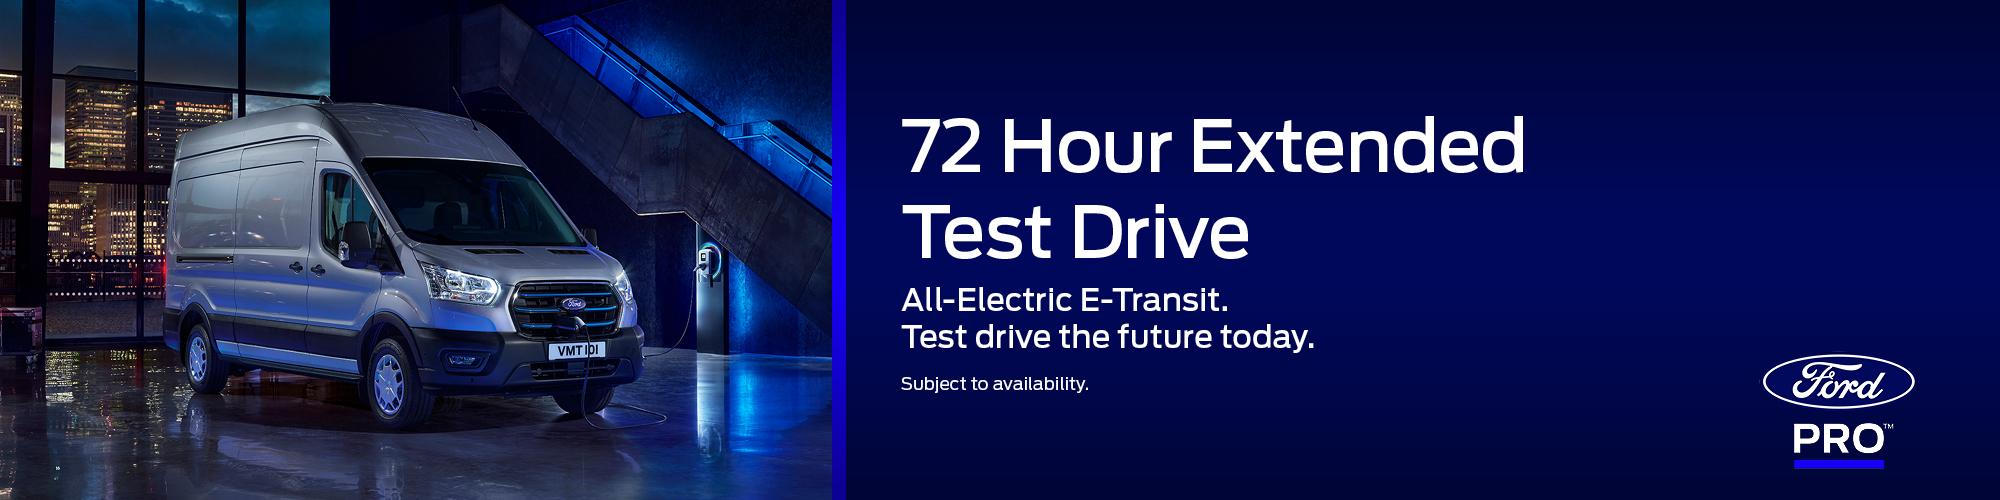 24hr Test Drive Ford E-Transit